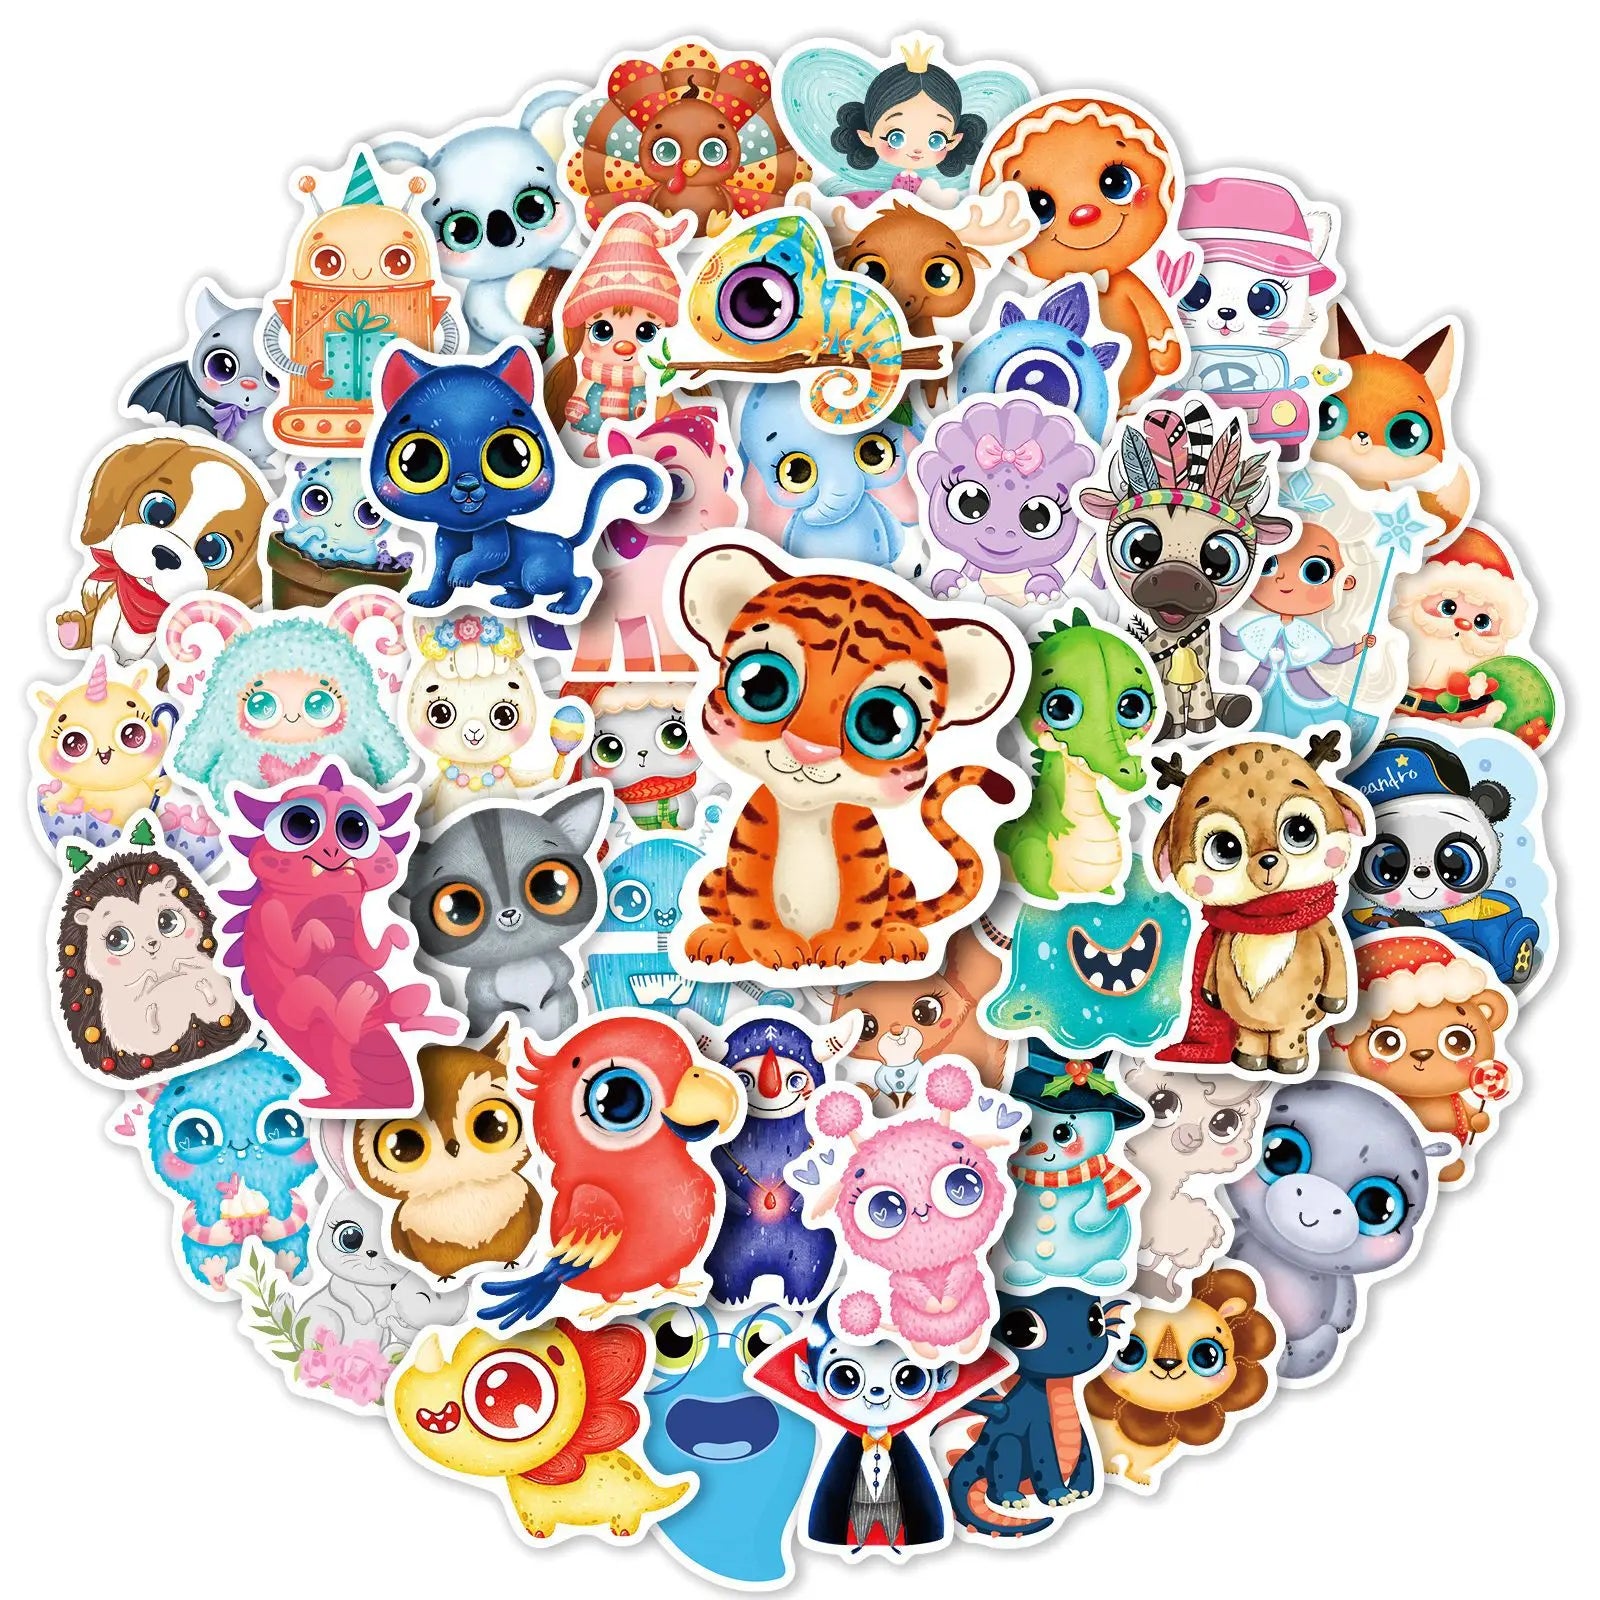 Cute Big Eyes Animals Sticker: Adorable Cartoon Decals for Laptop Guitar Phone  petlums.com 10pcs  